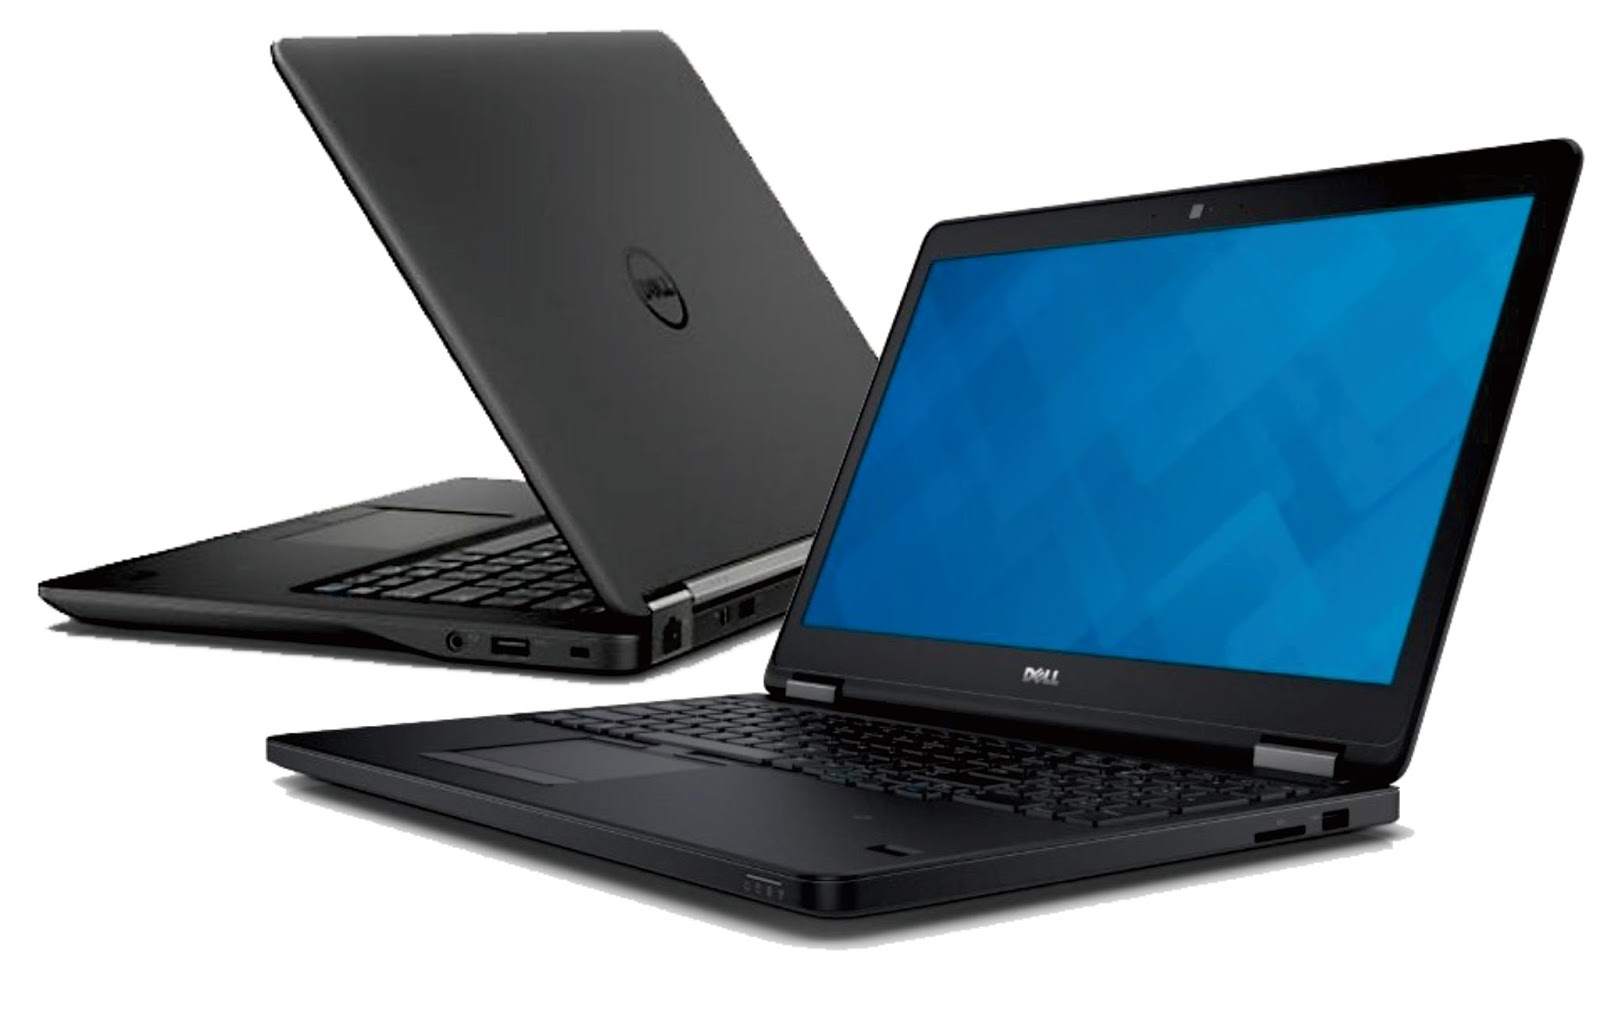 Laptop Dell Latitude E7450 i5.5300 RAM 4GB HDD 500GB Full HD